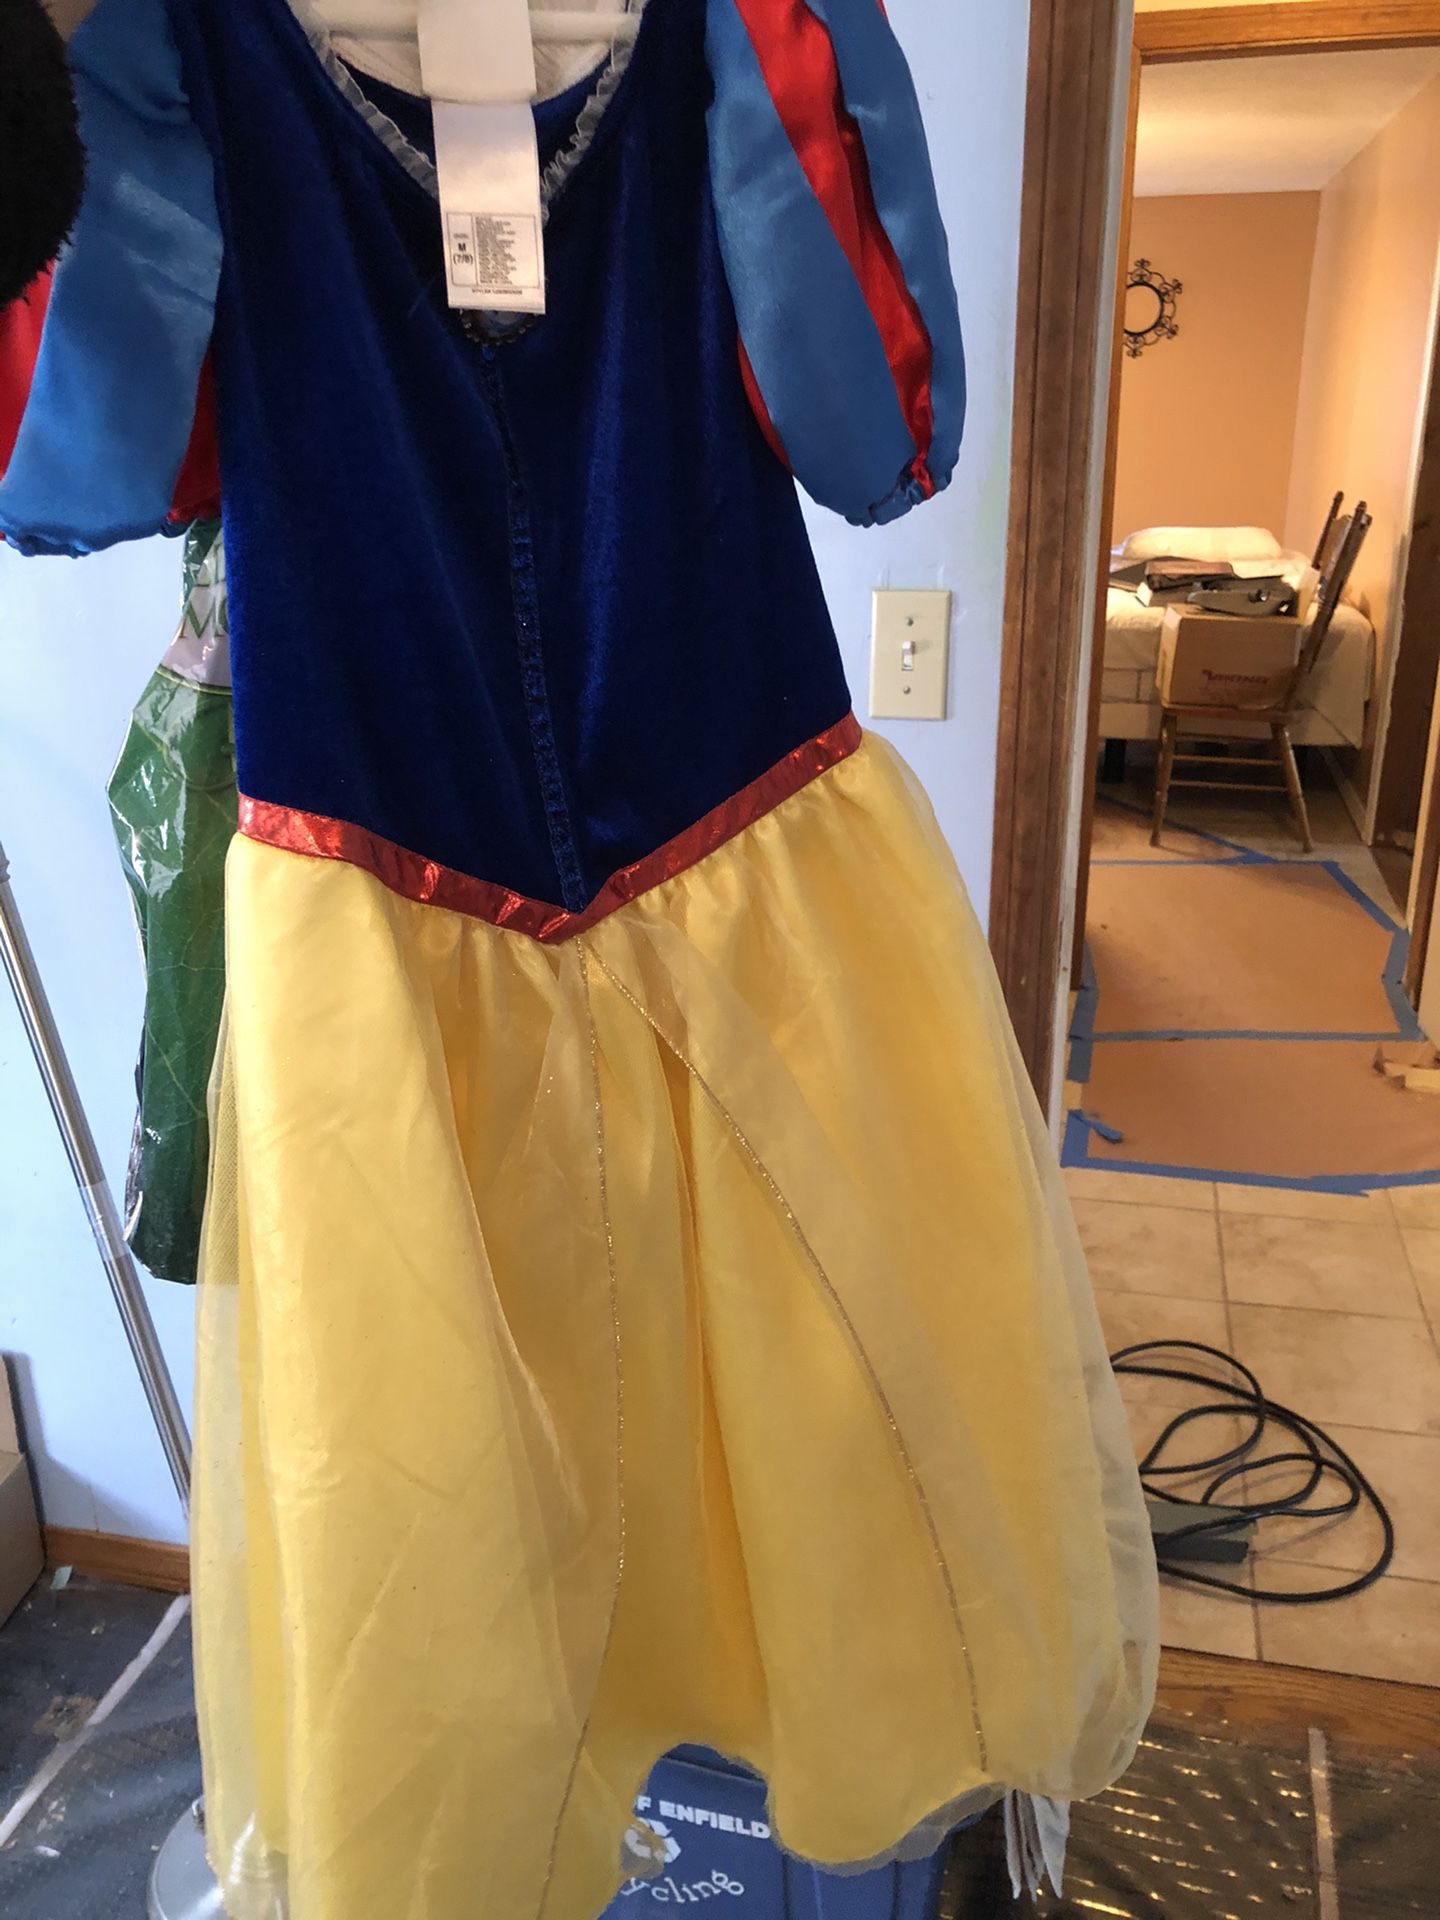 Disney Snow White costume